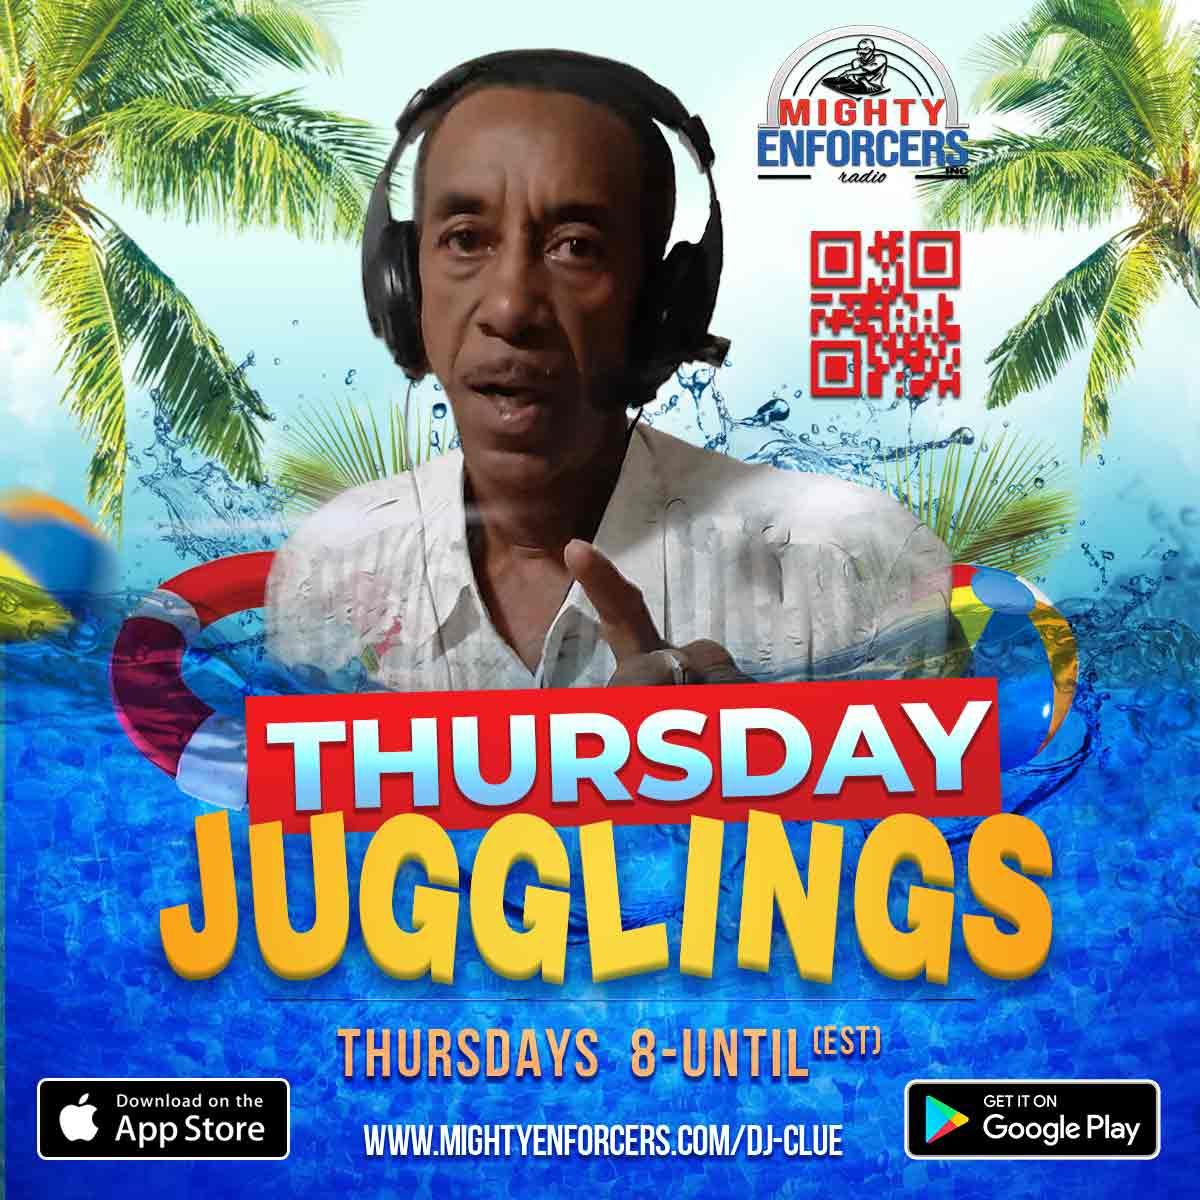 Thursday Jugglings - 8-UNTIL